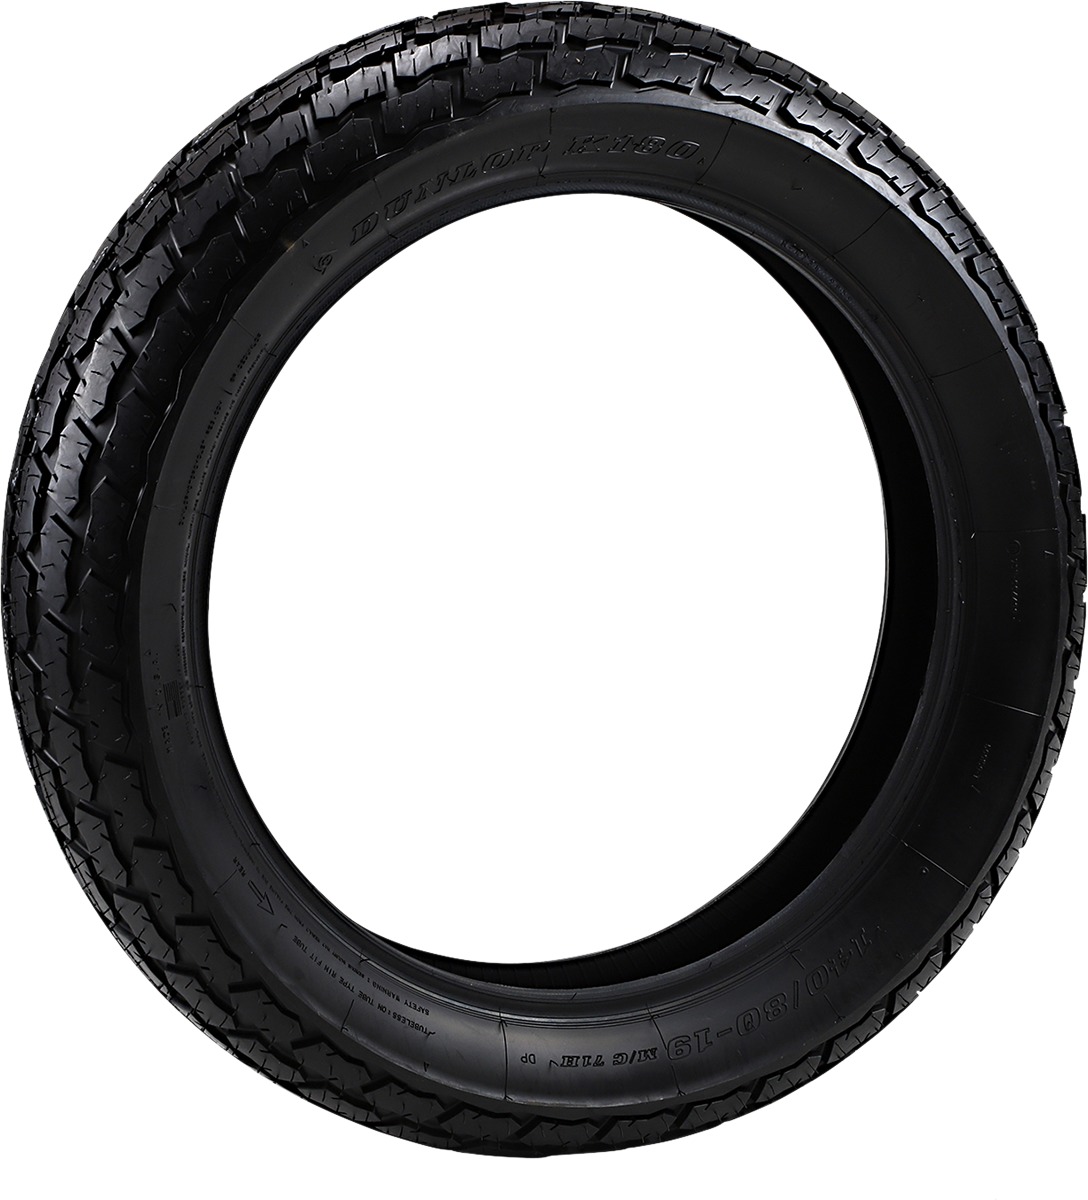 K180 Bias Rear Tire 140/80-19 Tube Type - Click Image to Close